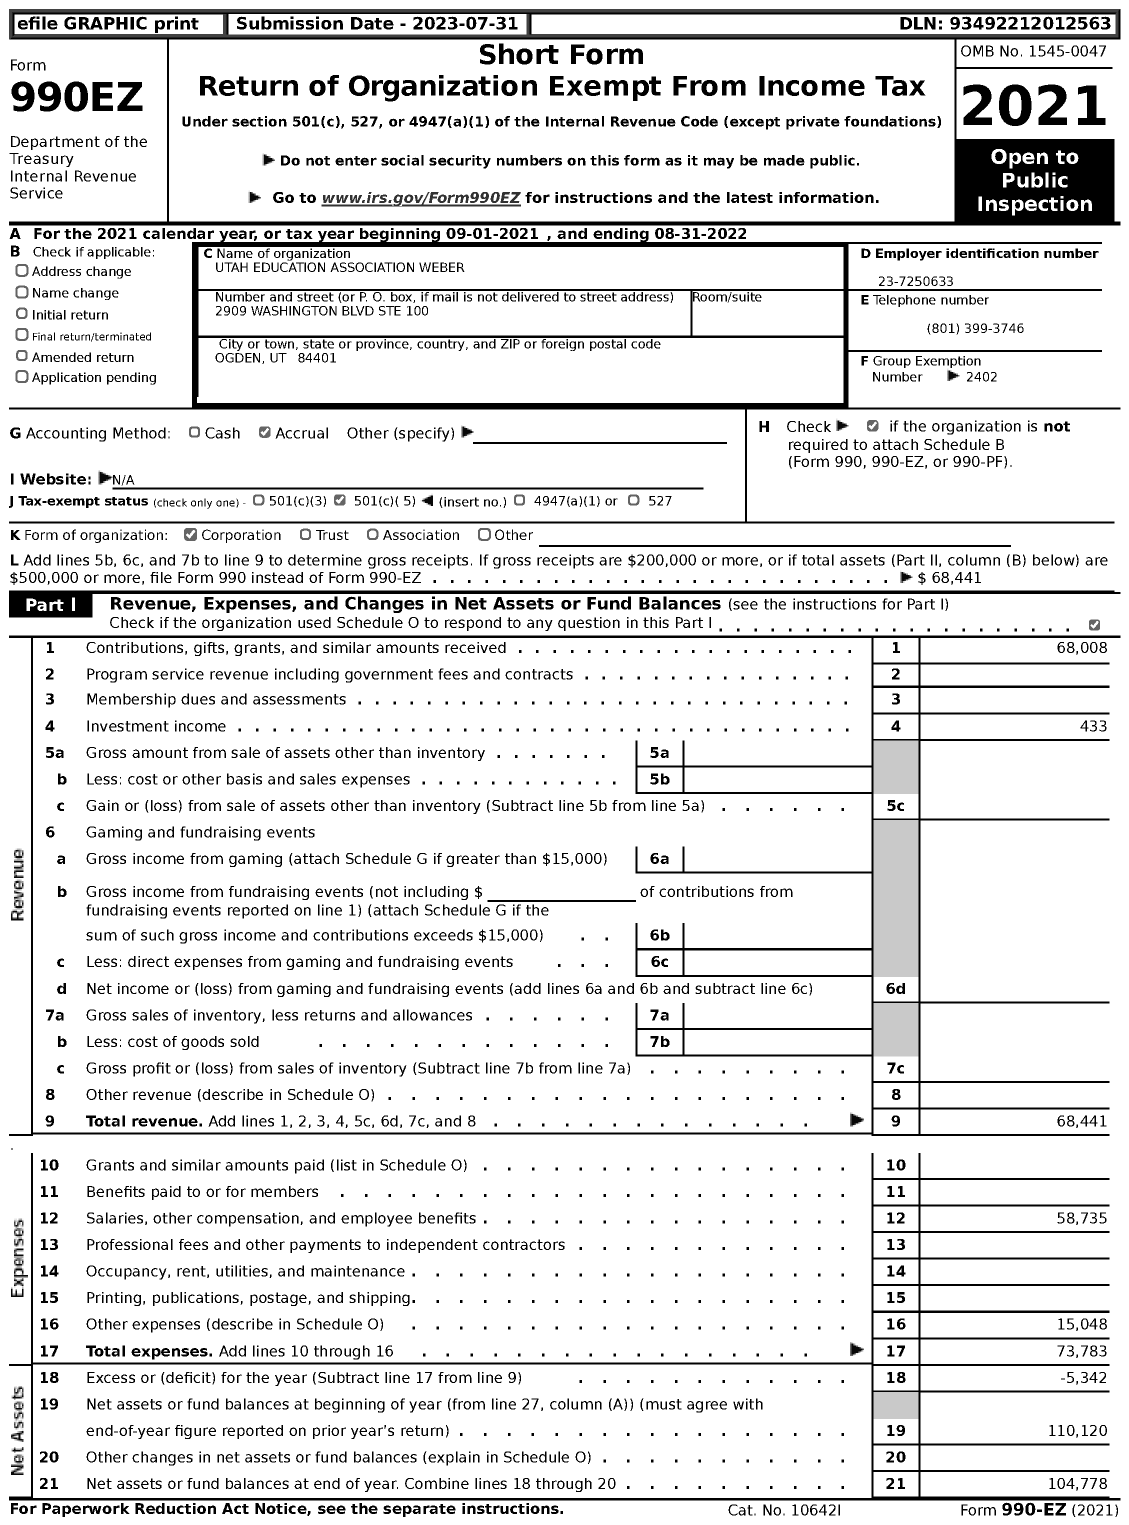 Image of first page of 2021 Form 990EZ for Utah Education Association Weber